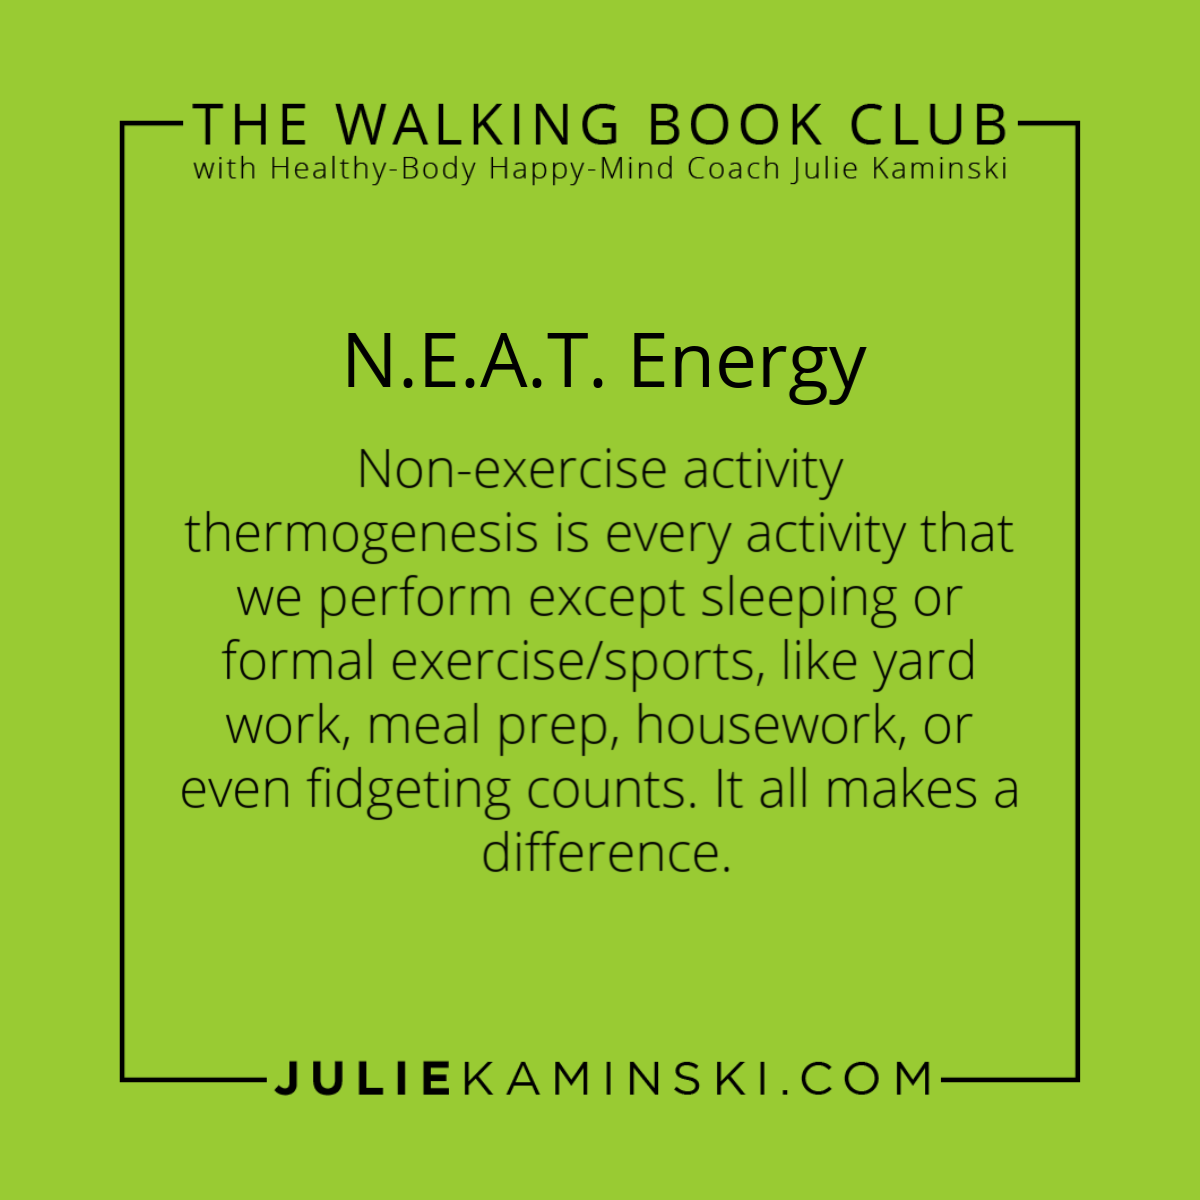 The Walking Book Club with Julie Kaminski